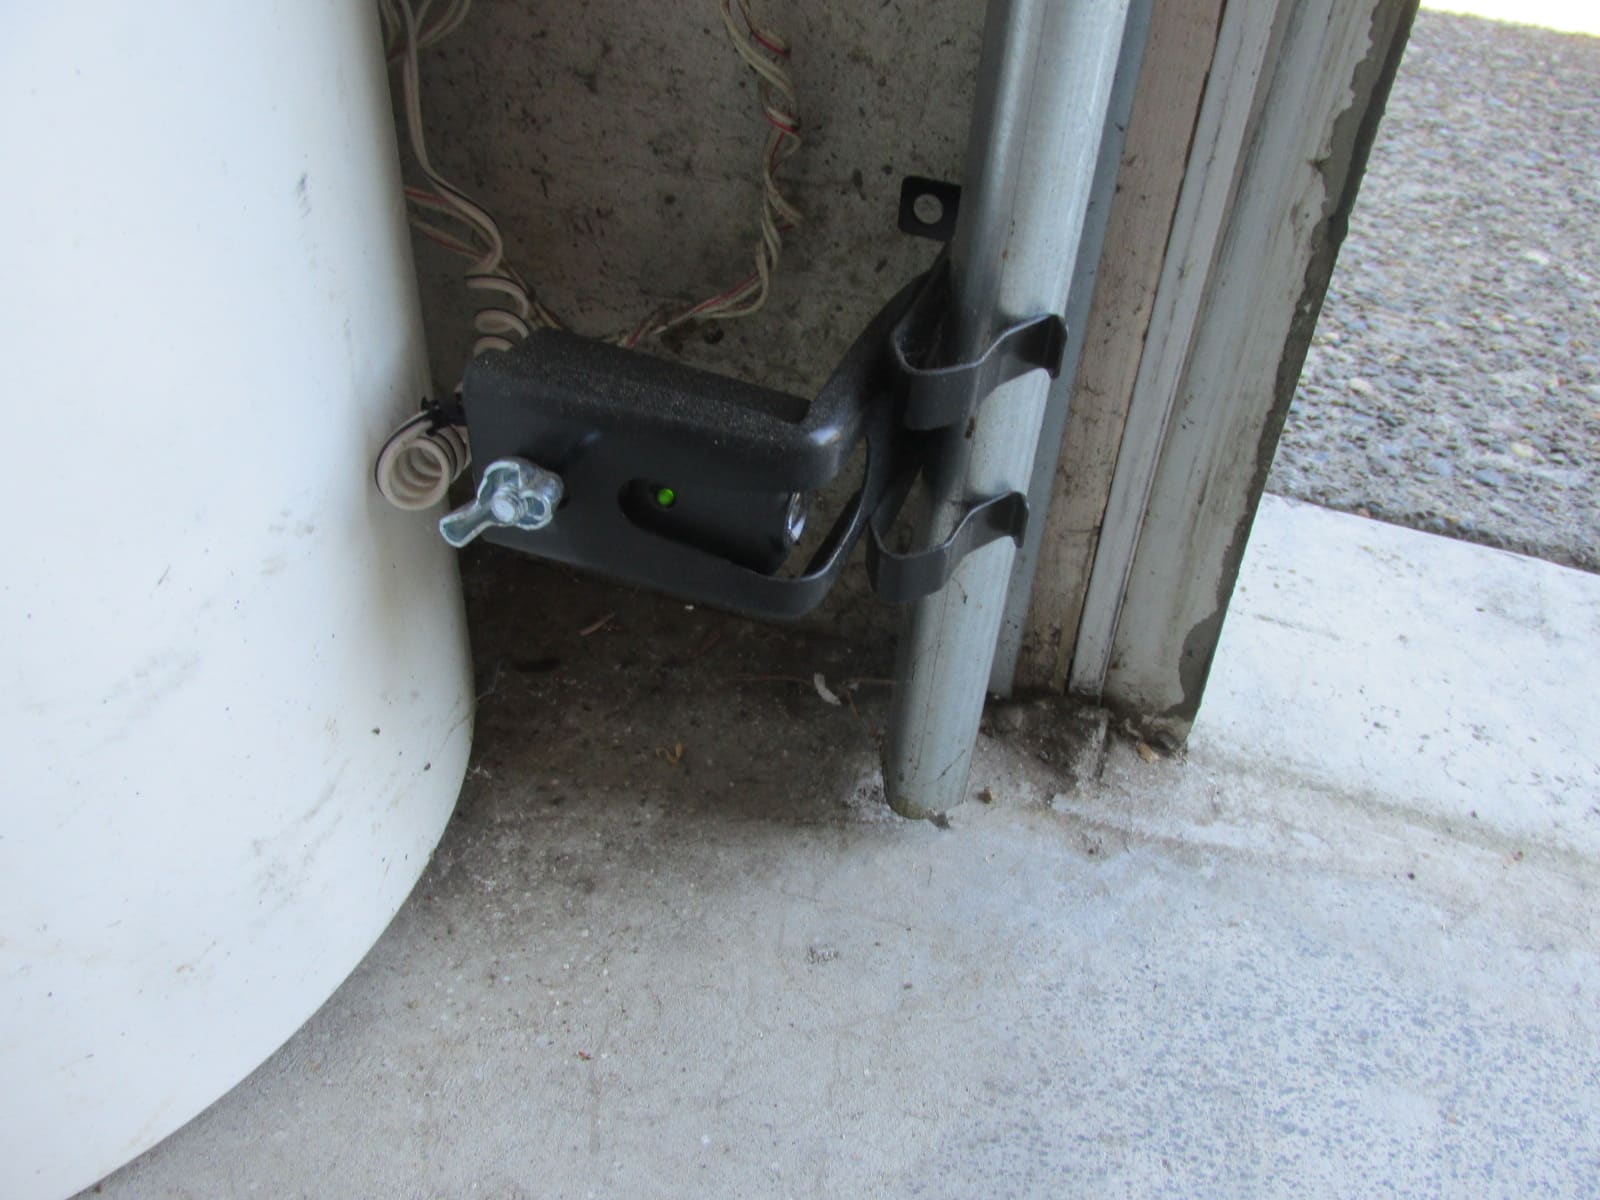 Garage Door Sensors Safety And Alignment Tips Buyers Ask 